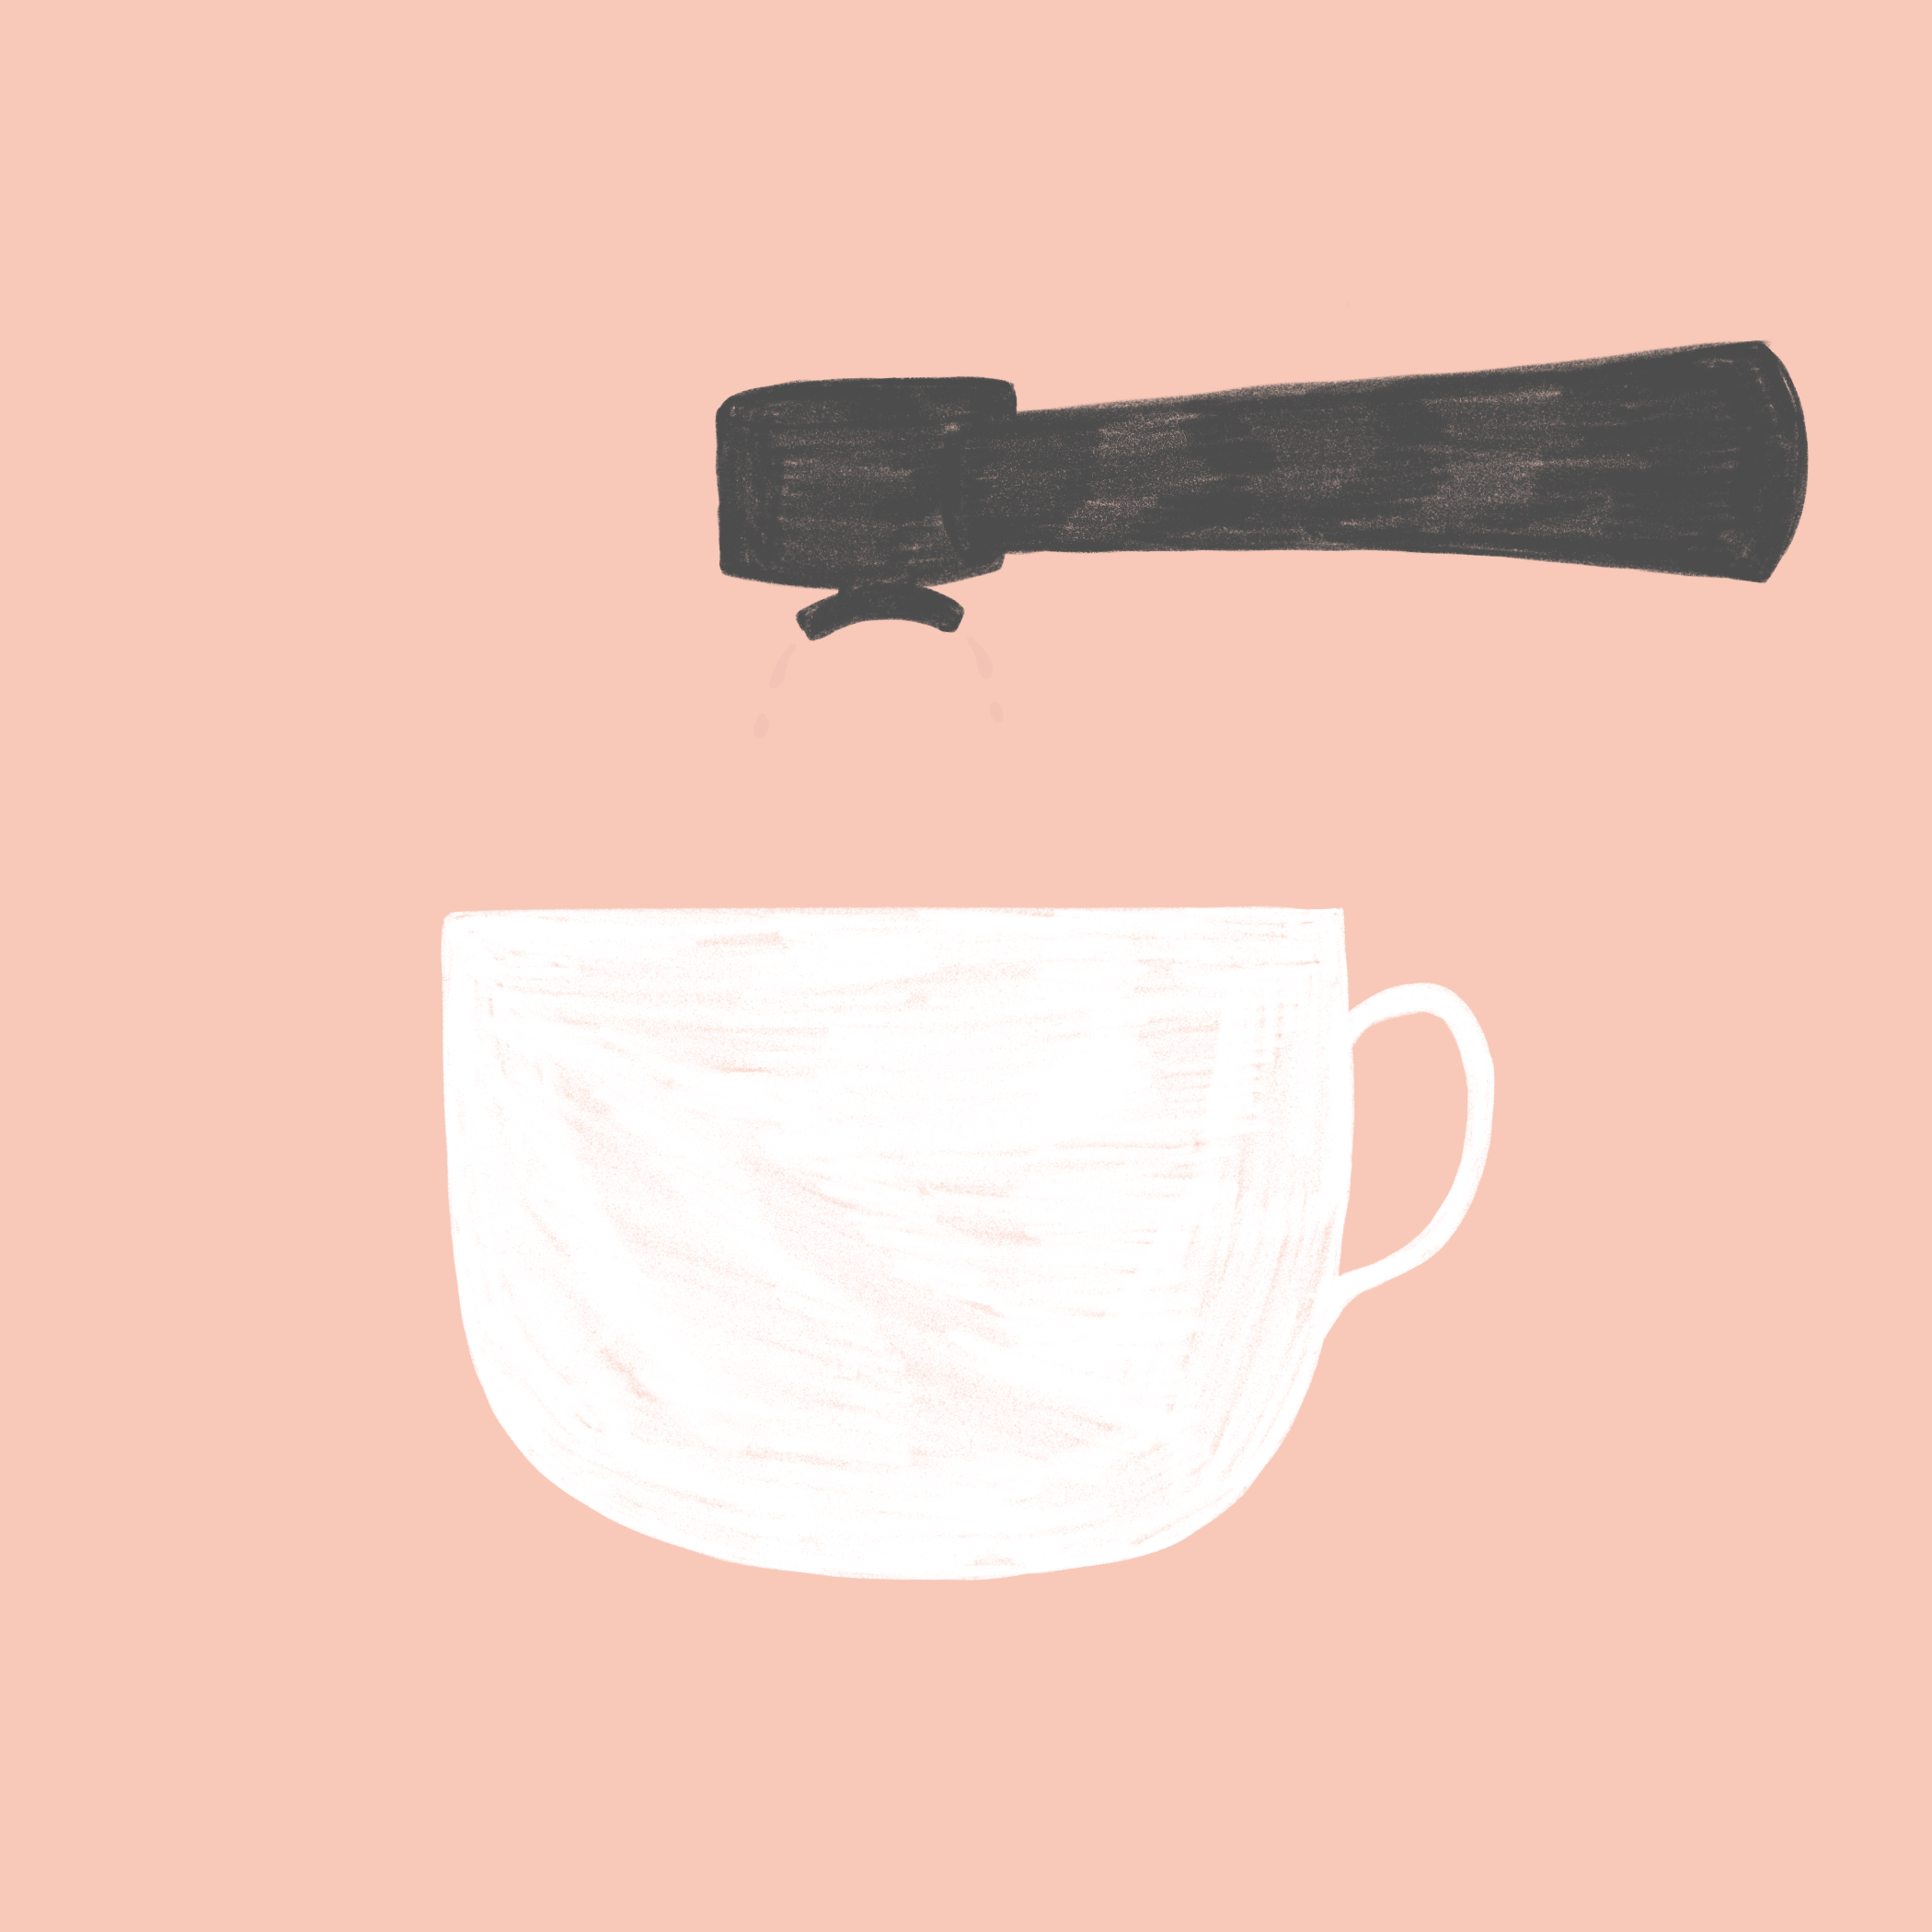 Illustration GIf of espresso machine making coffee.